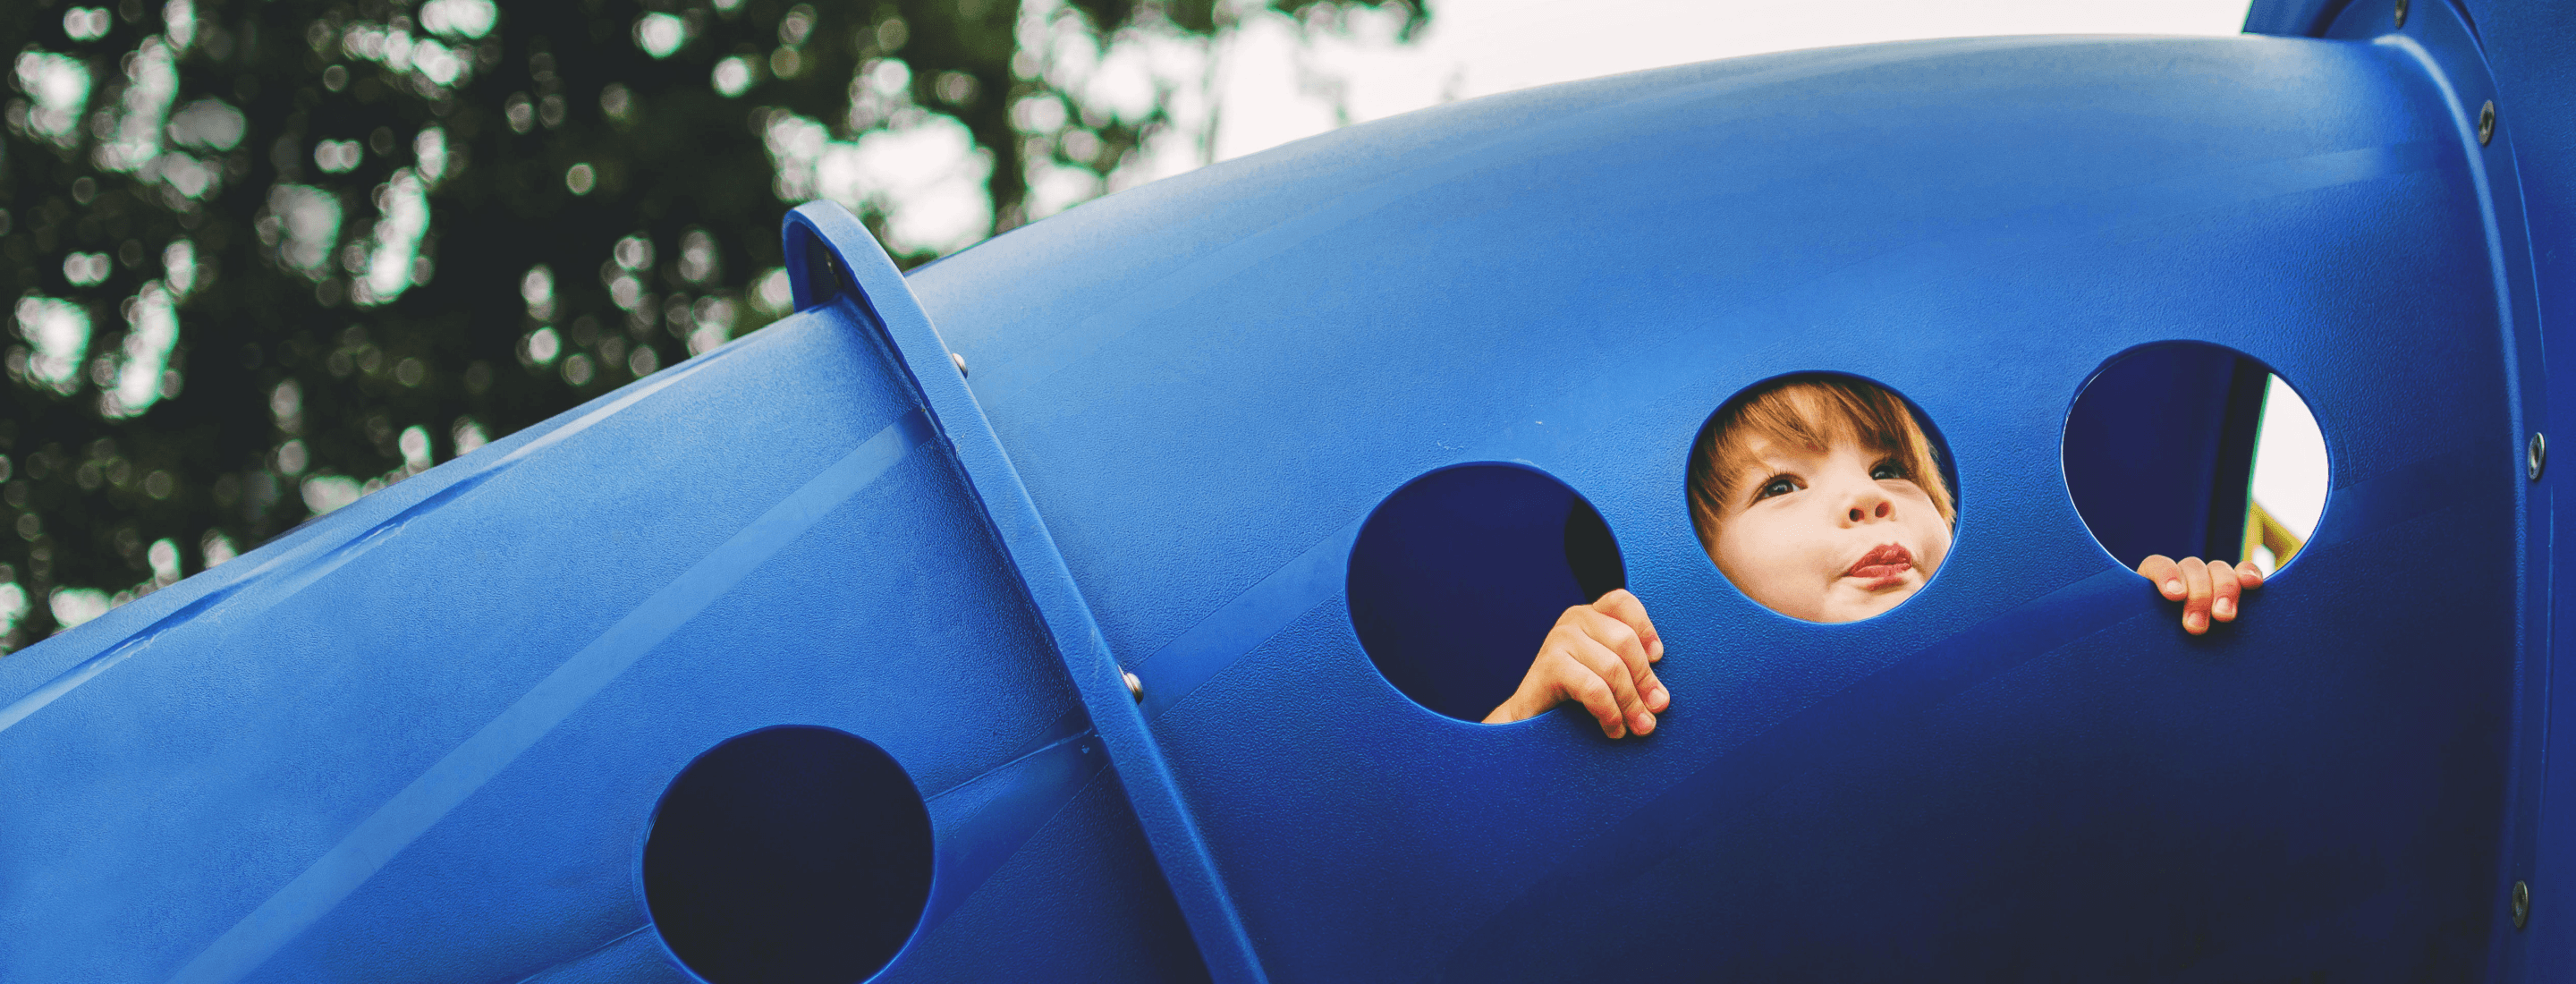 Young child peeking through one of three holes in blue playground equipment.